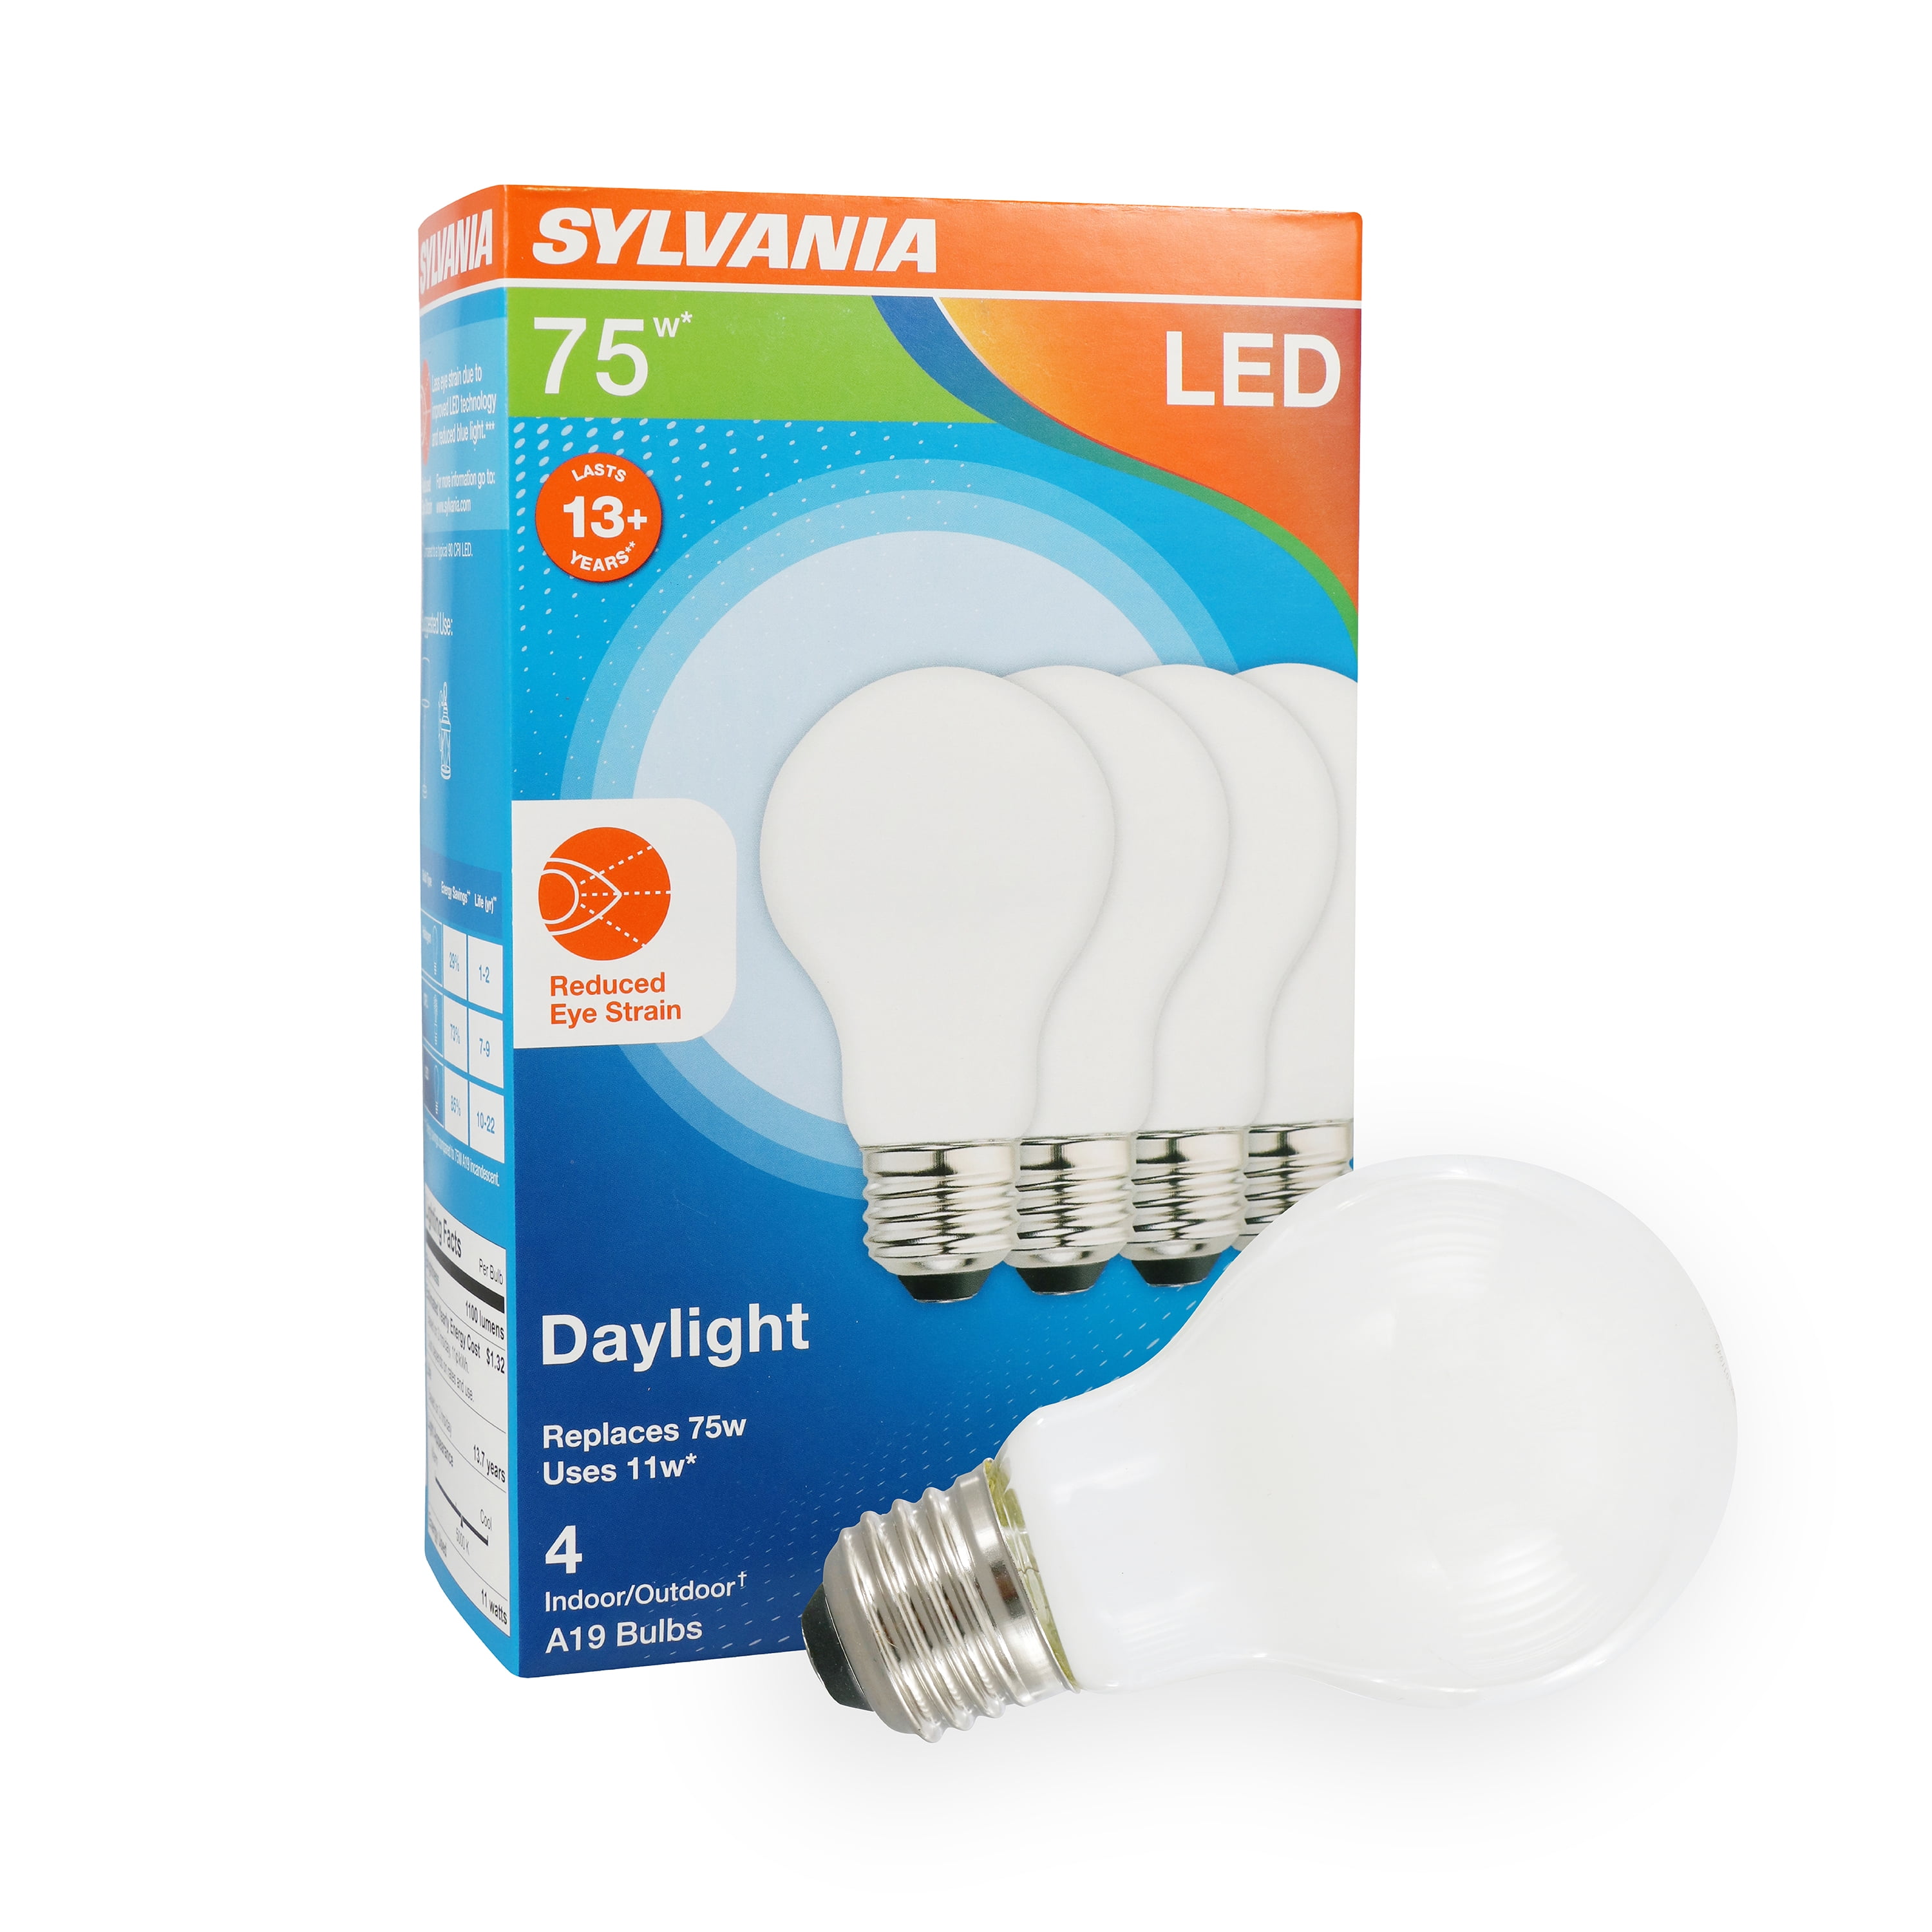 4 Bulbs LED 10W Daylight 5000K A19 75W Replacement by Maxlite 